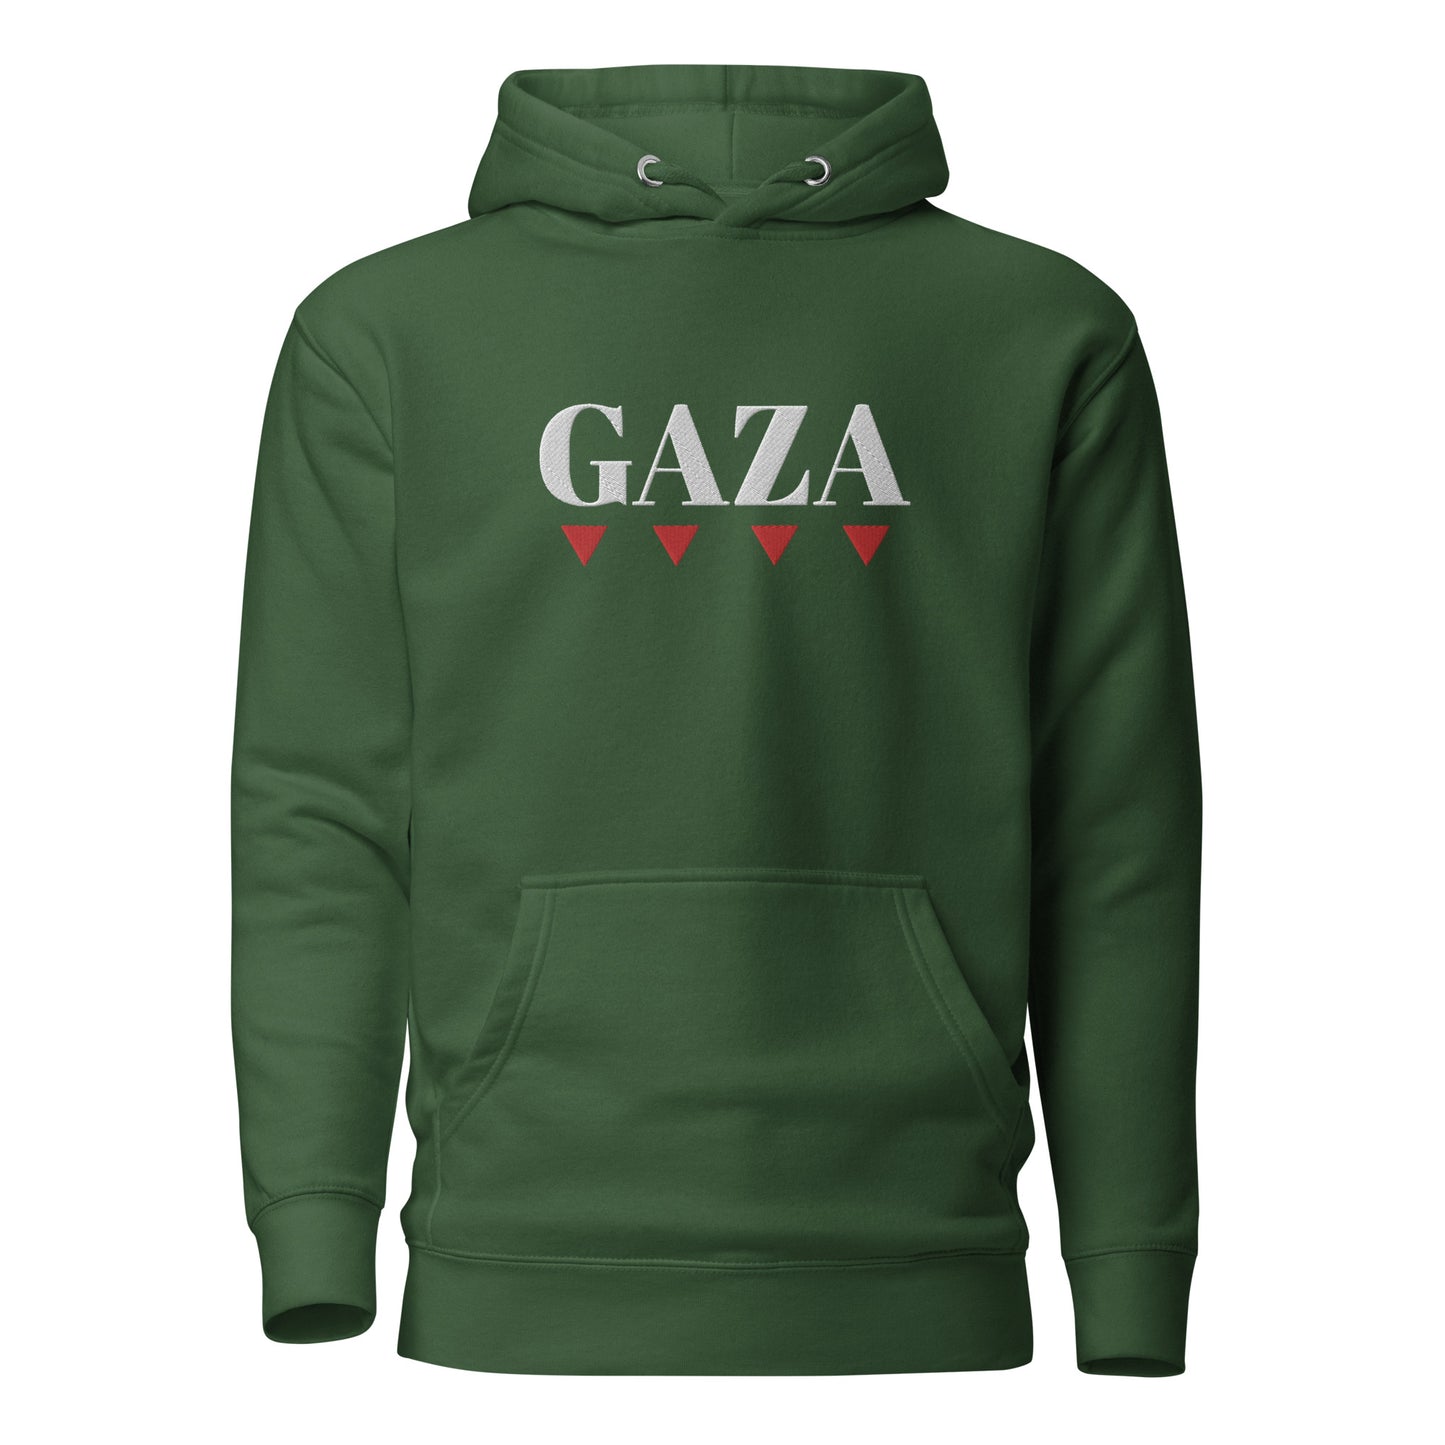 Gaza Hoodie By Halal Cultures